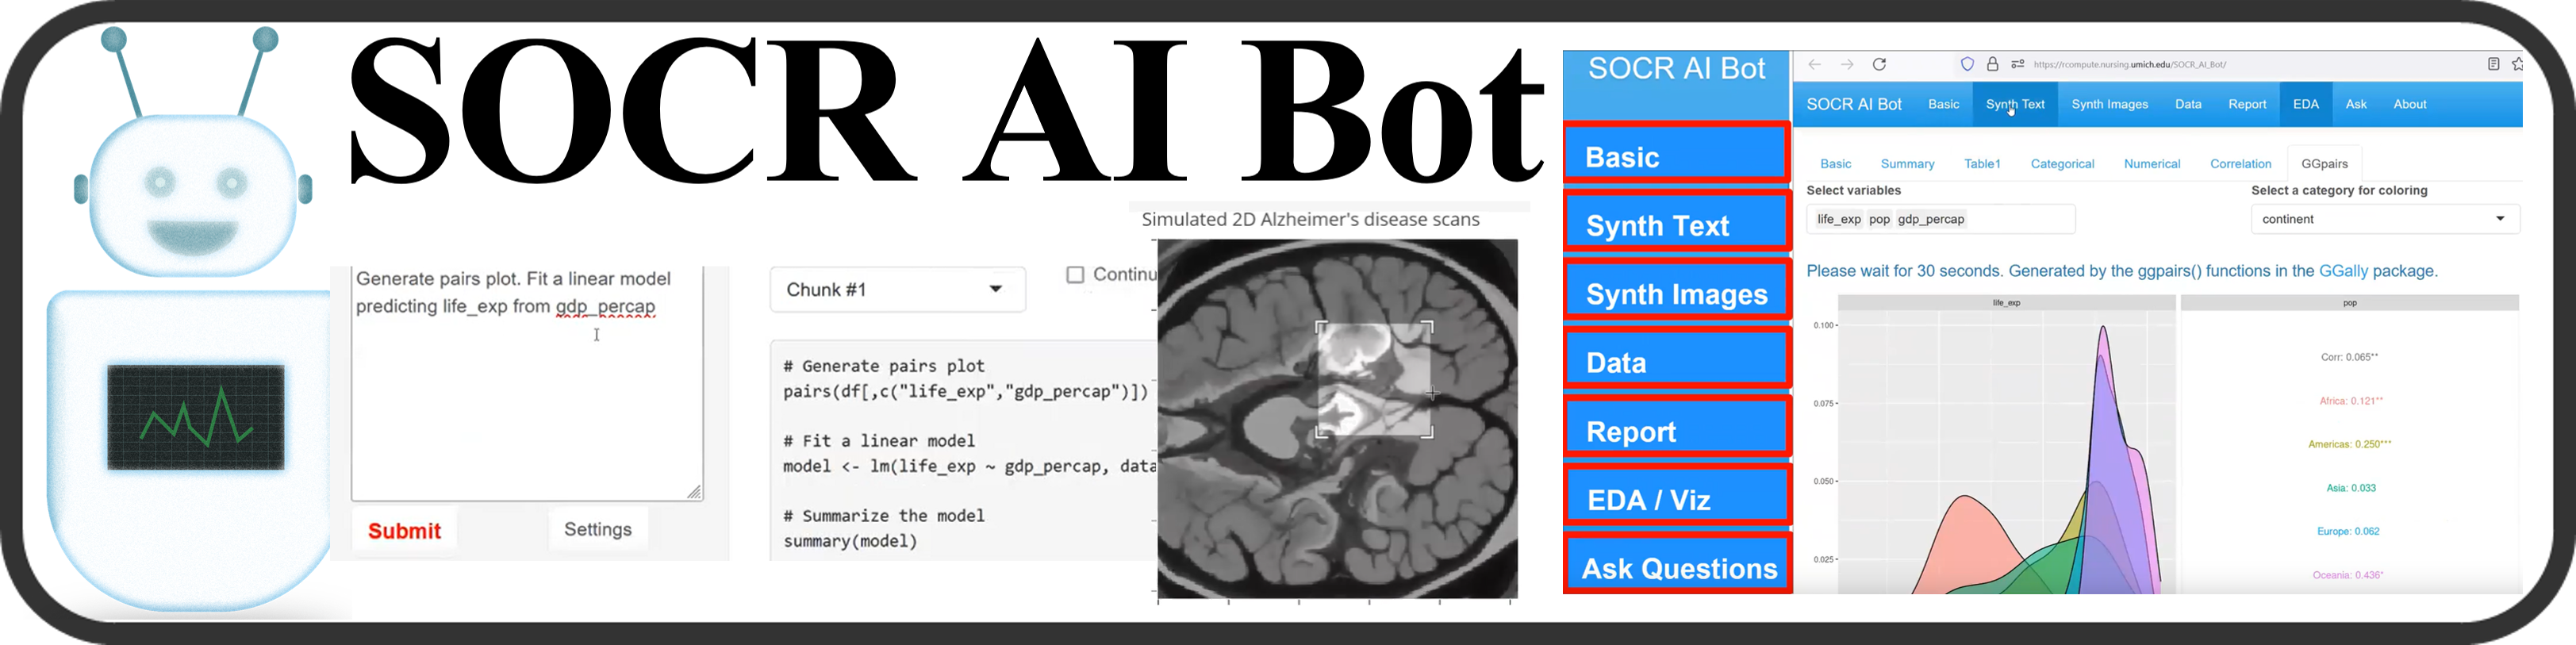 SOCR AI Bot